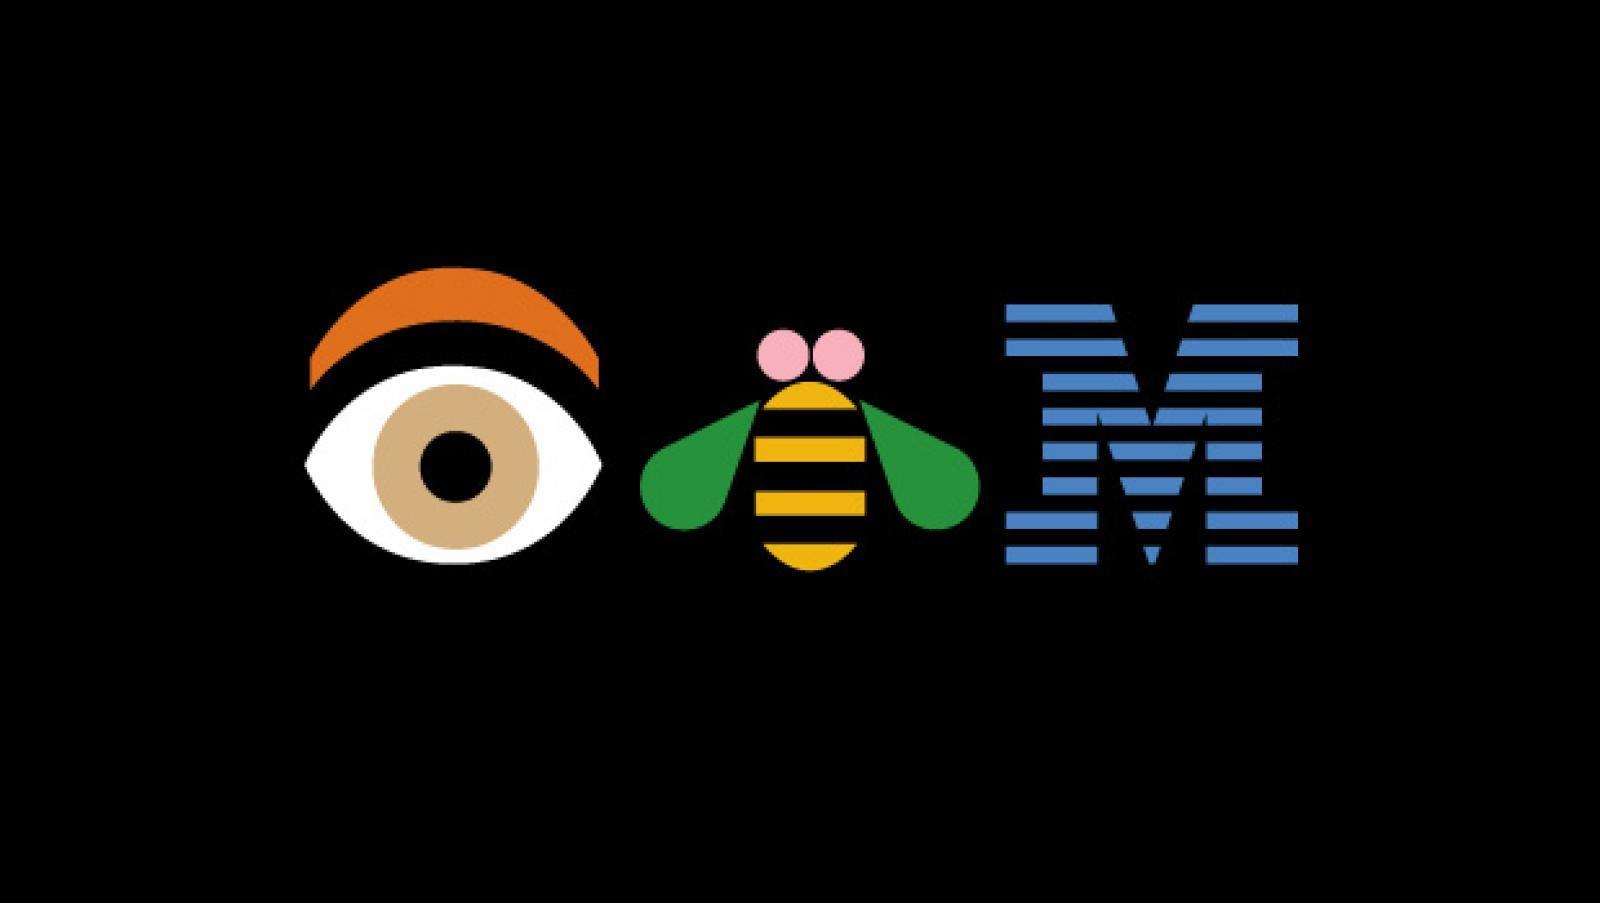 1956 IBM Logo - IBM - AGI